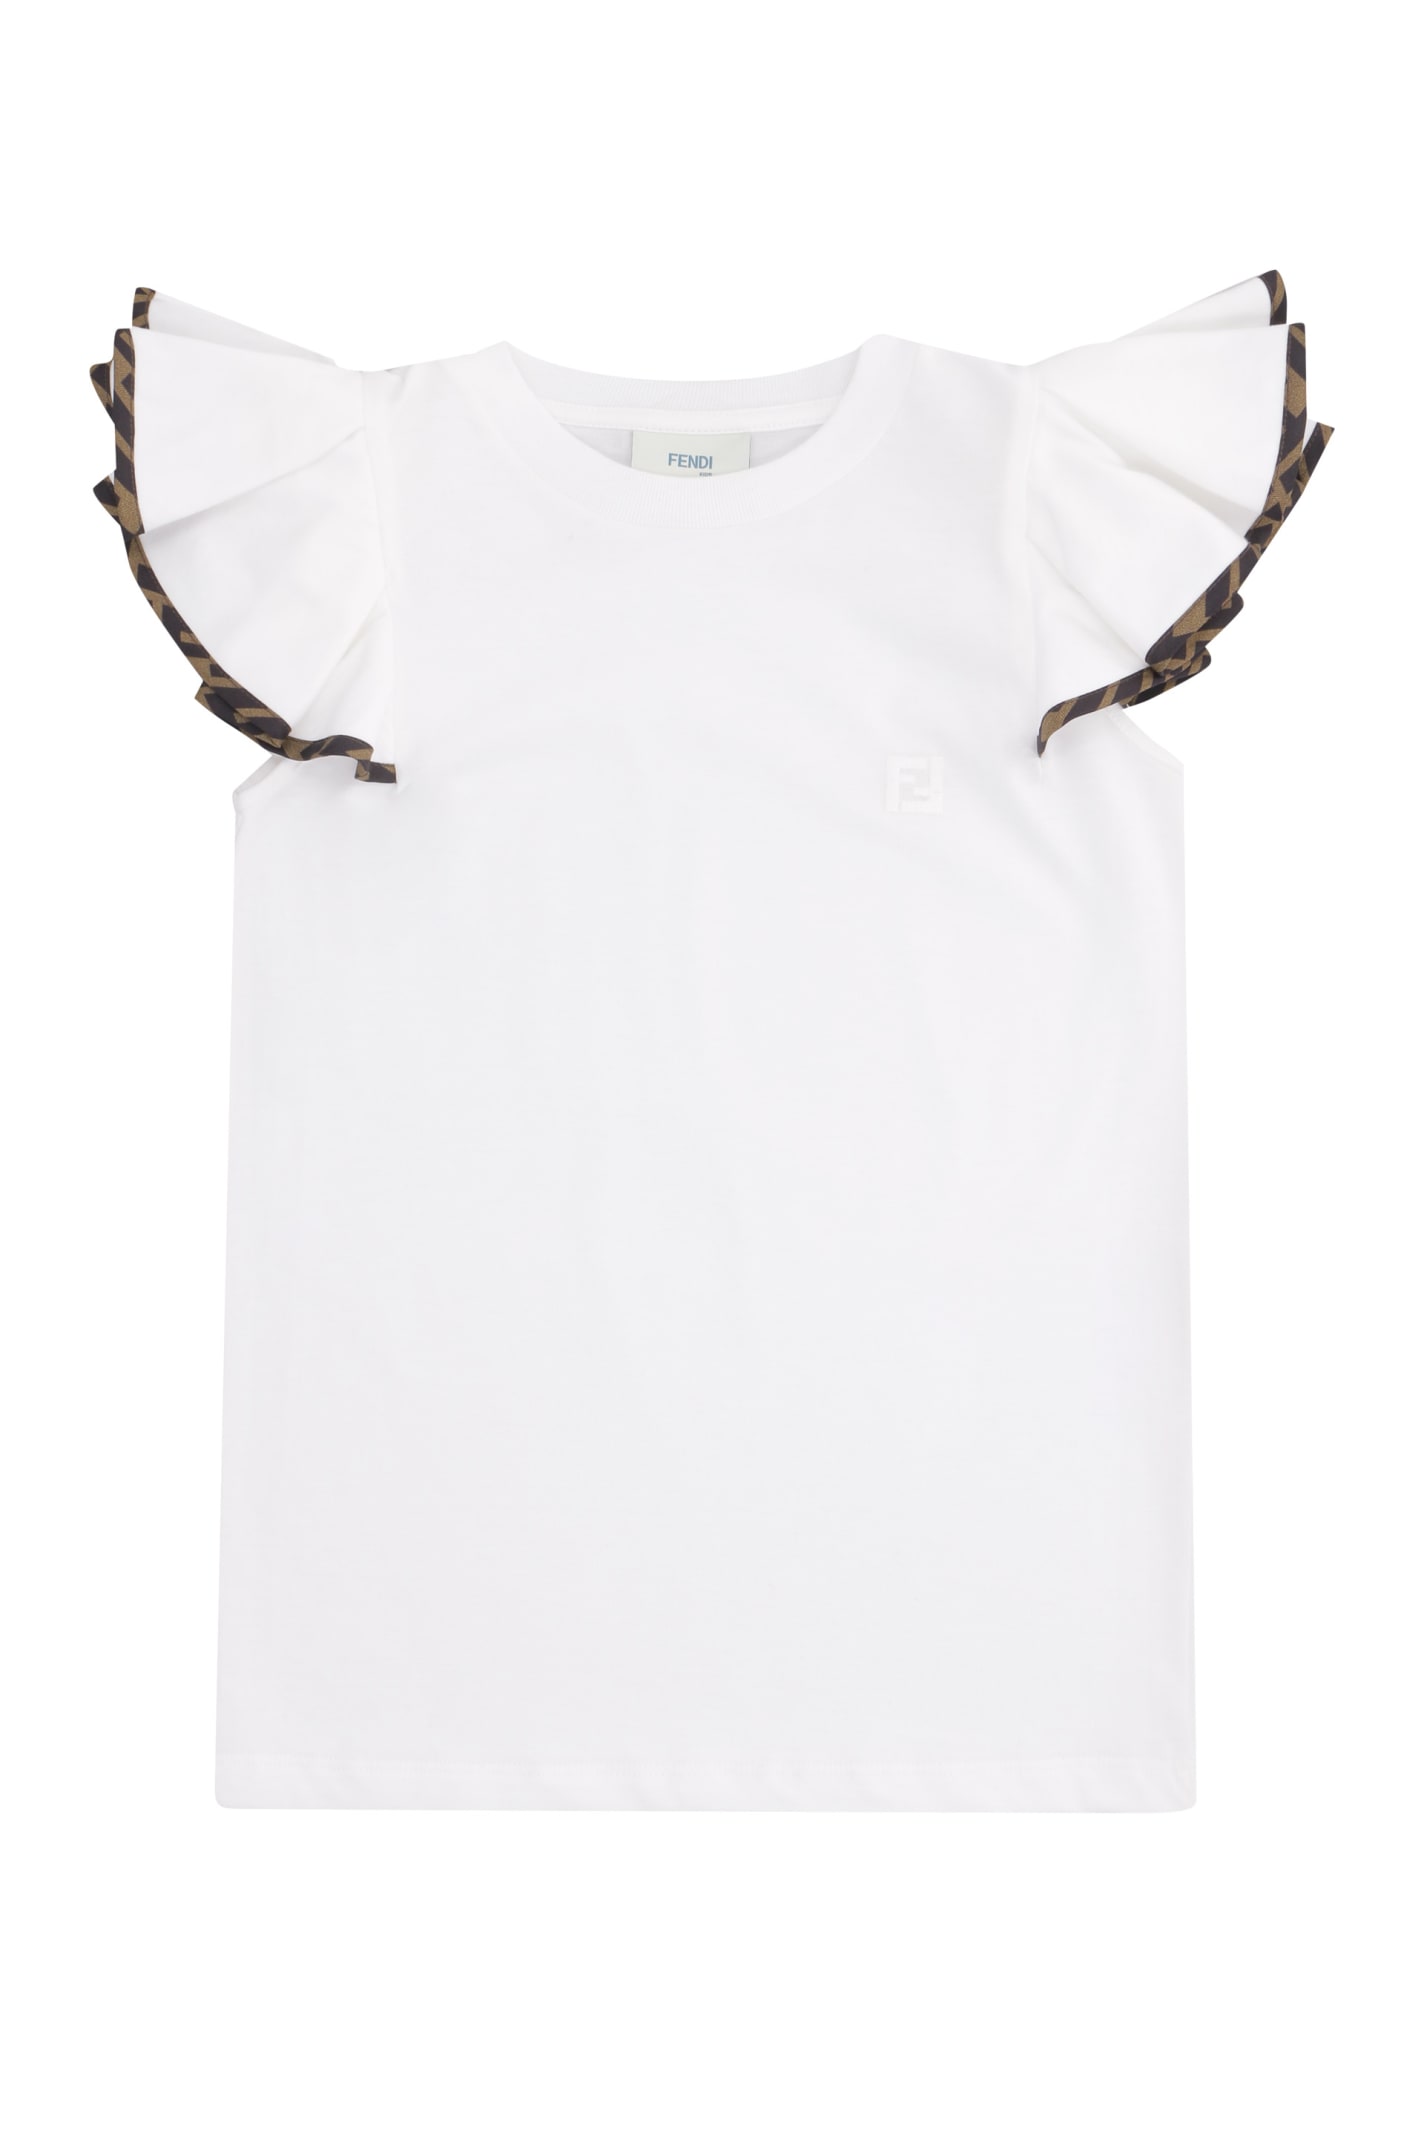 Fendi Cotton Crew-neck T-shirt